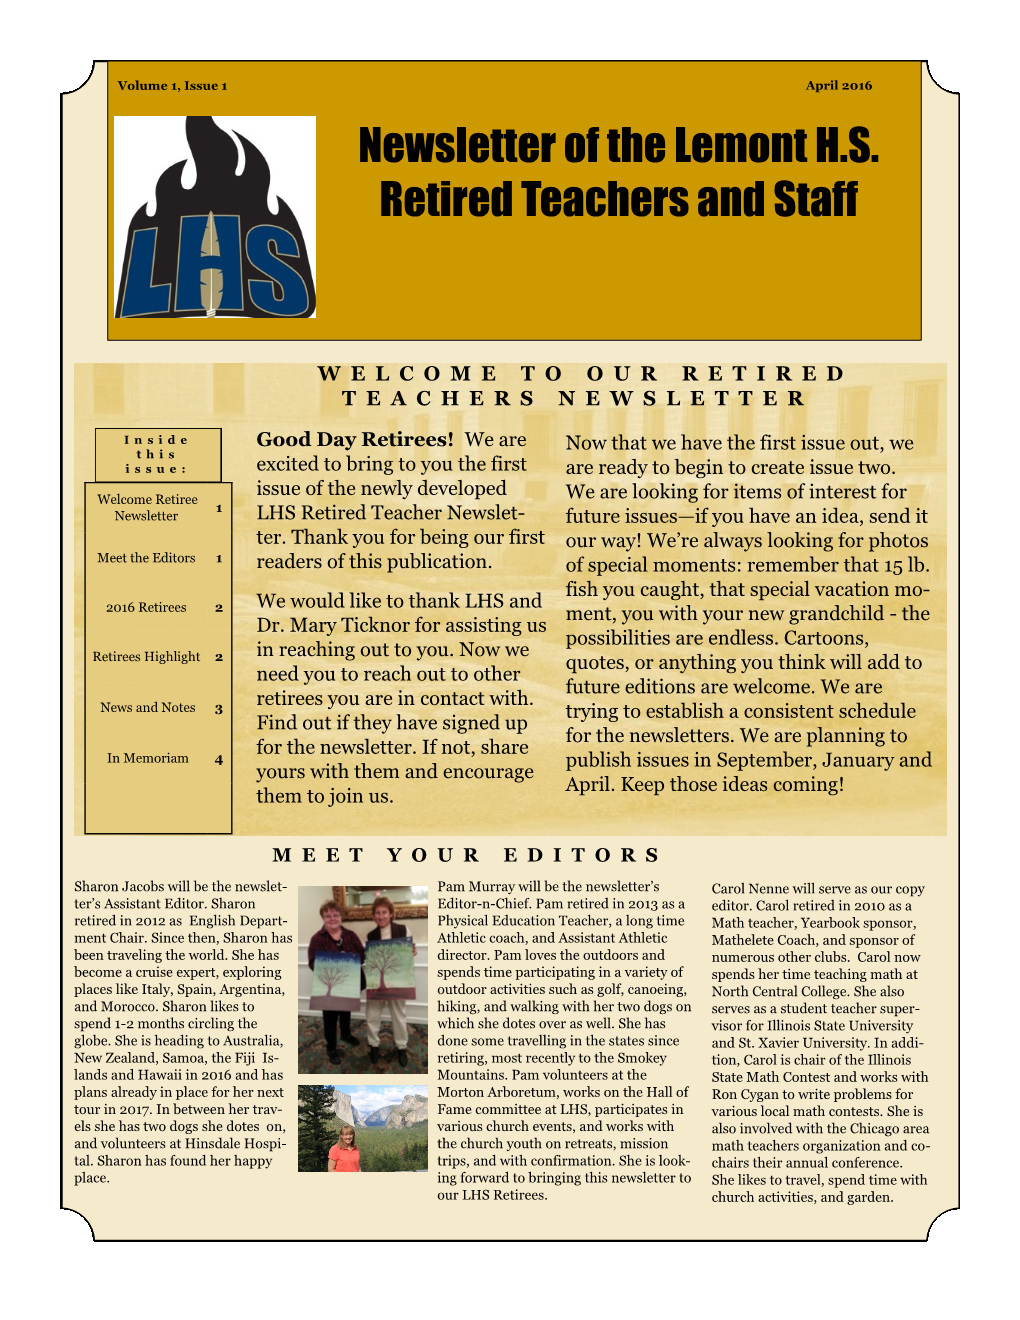 Newsletter of the Lemont H.S. Retired Teachers and Staff